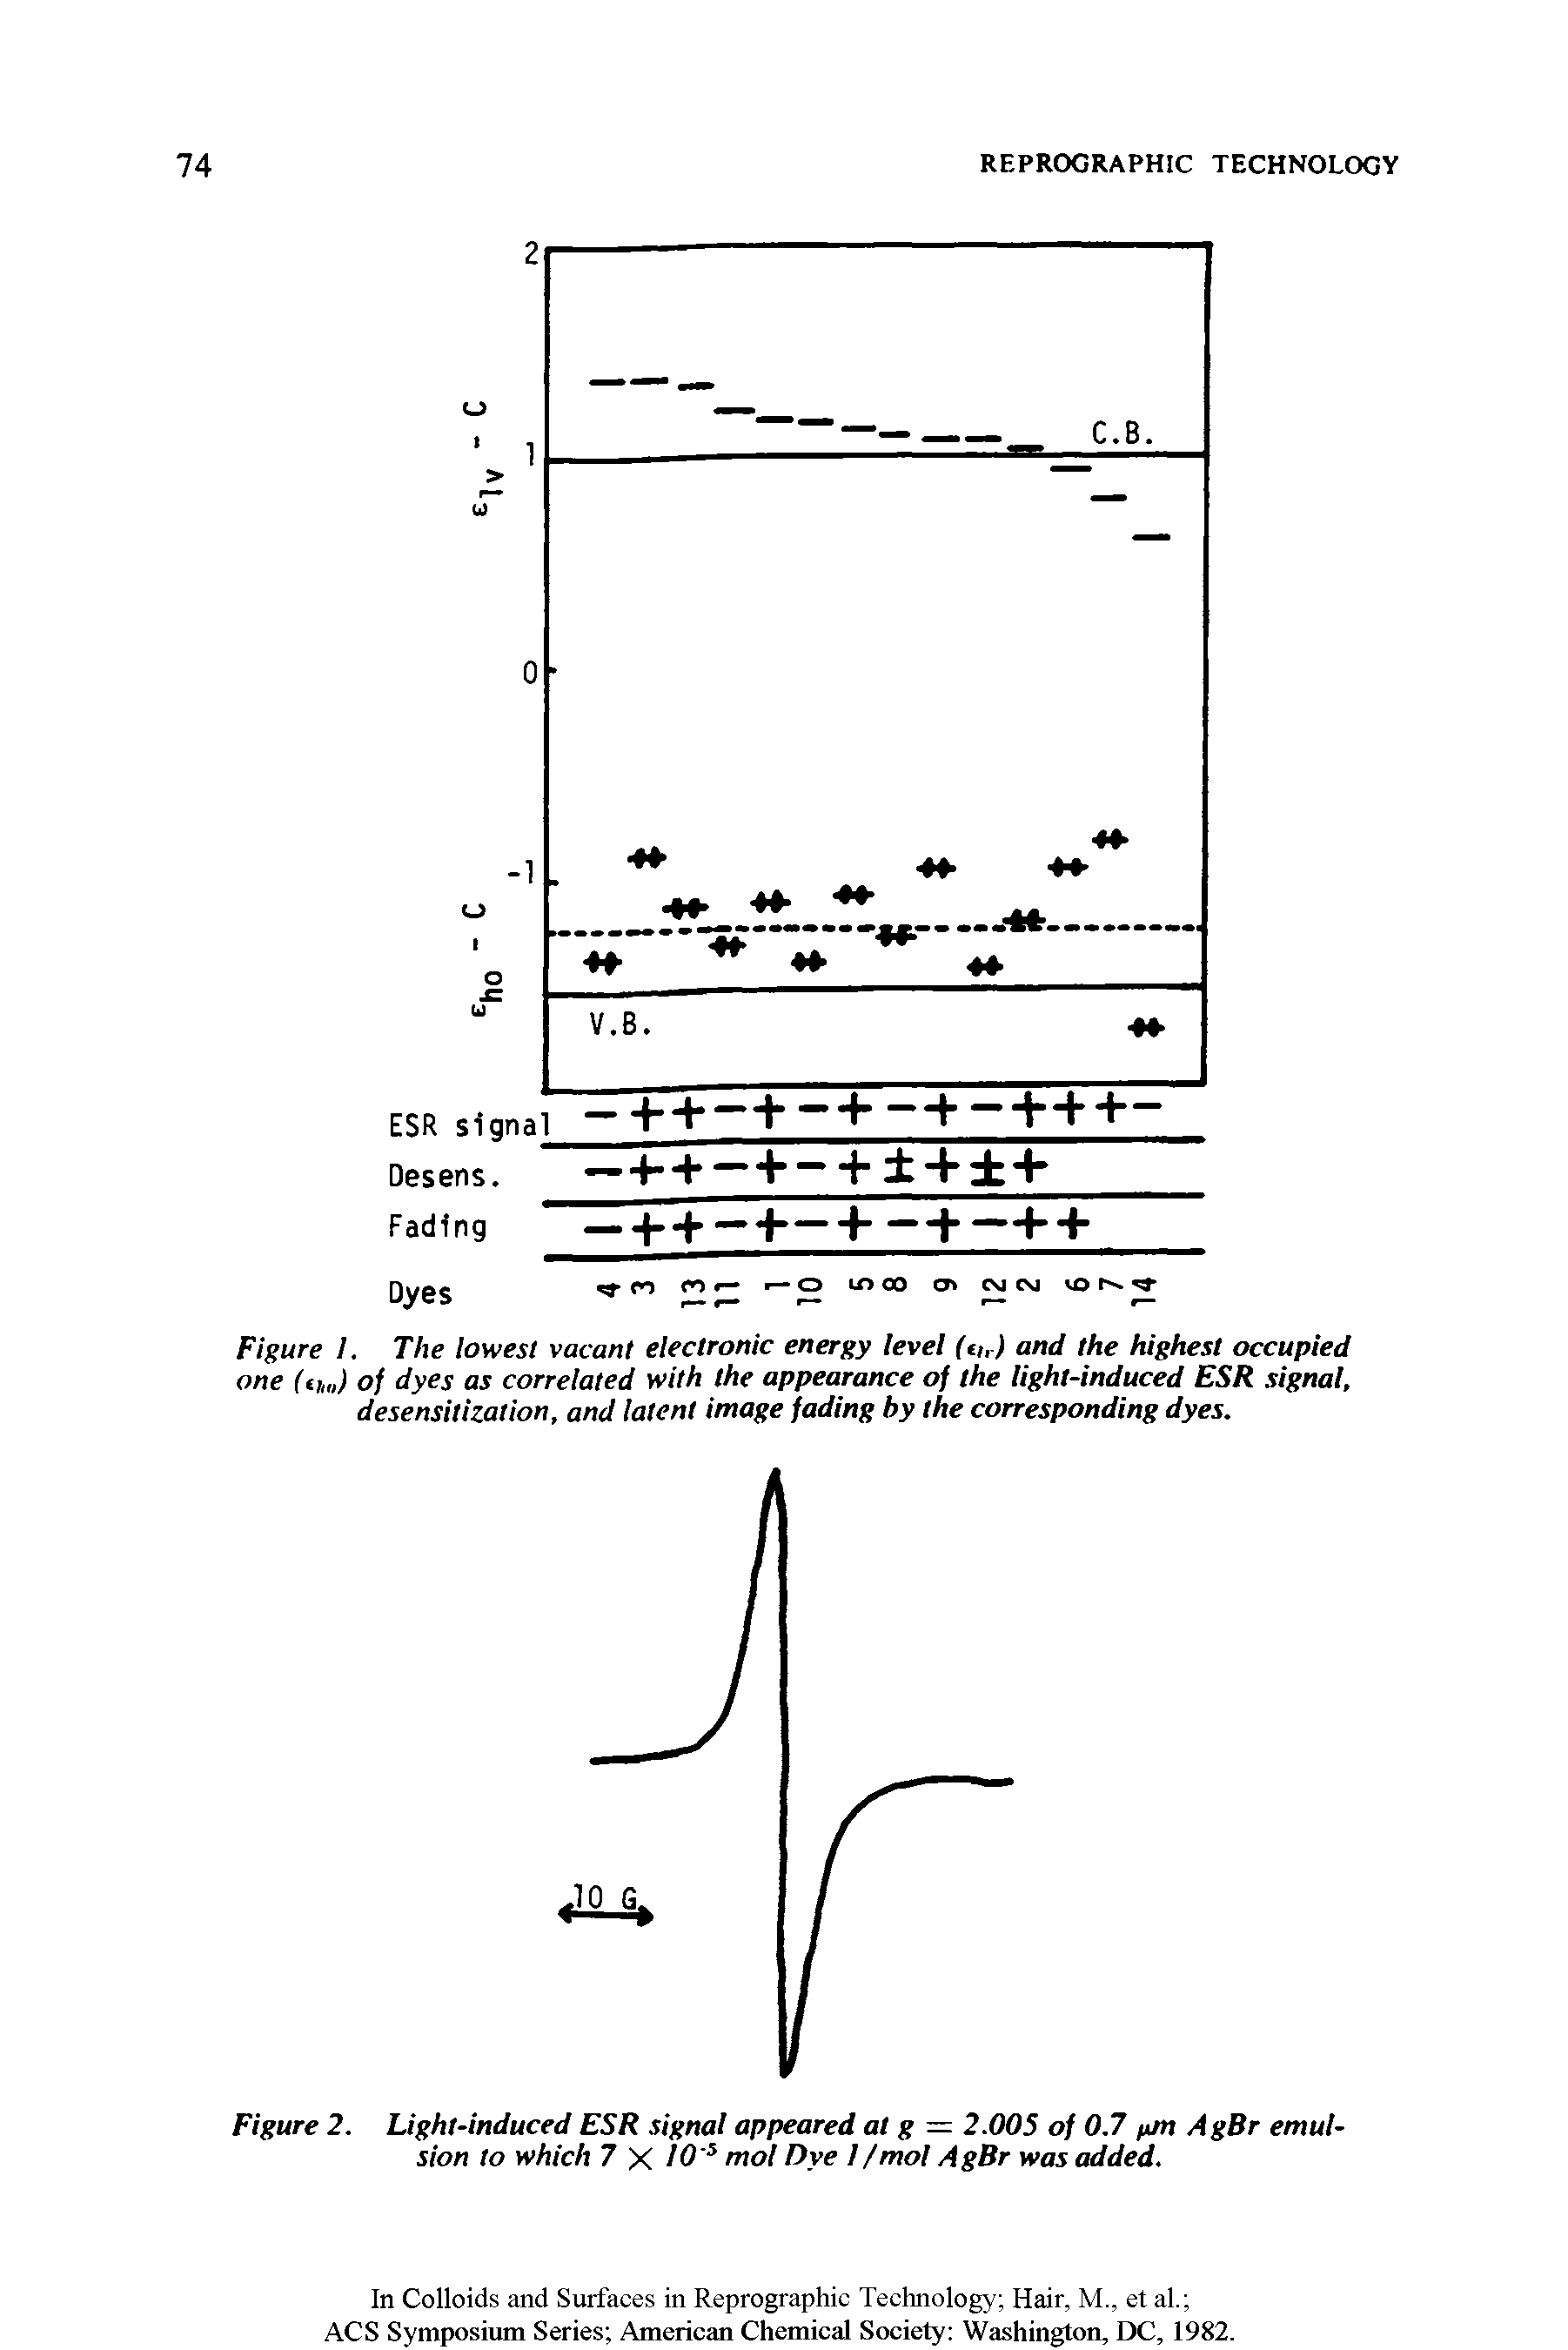 Figure 2. Light-induced ESR signal appeared at g = 2.005 of 0.7 yjn AgBr emulsion to which 7 X lO 5 mol Dye I/mol AgBr was added.